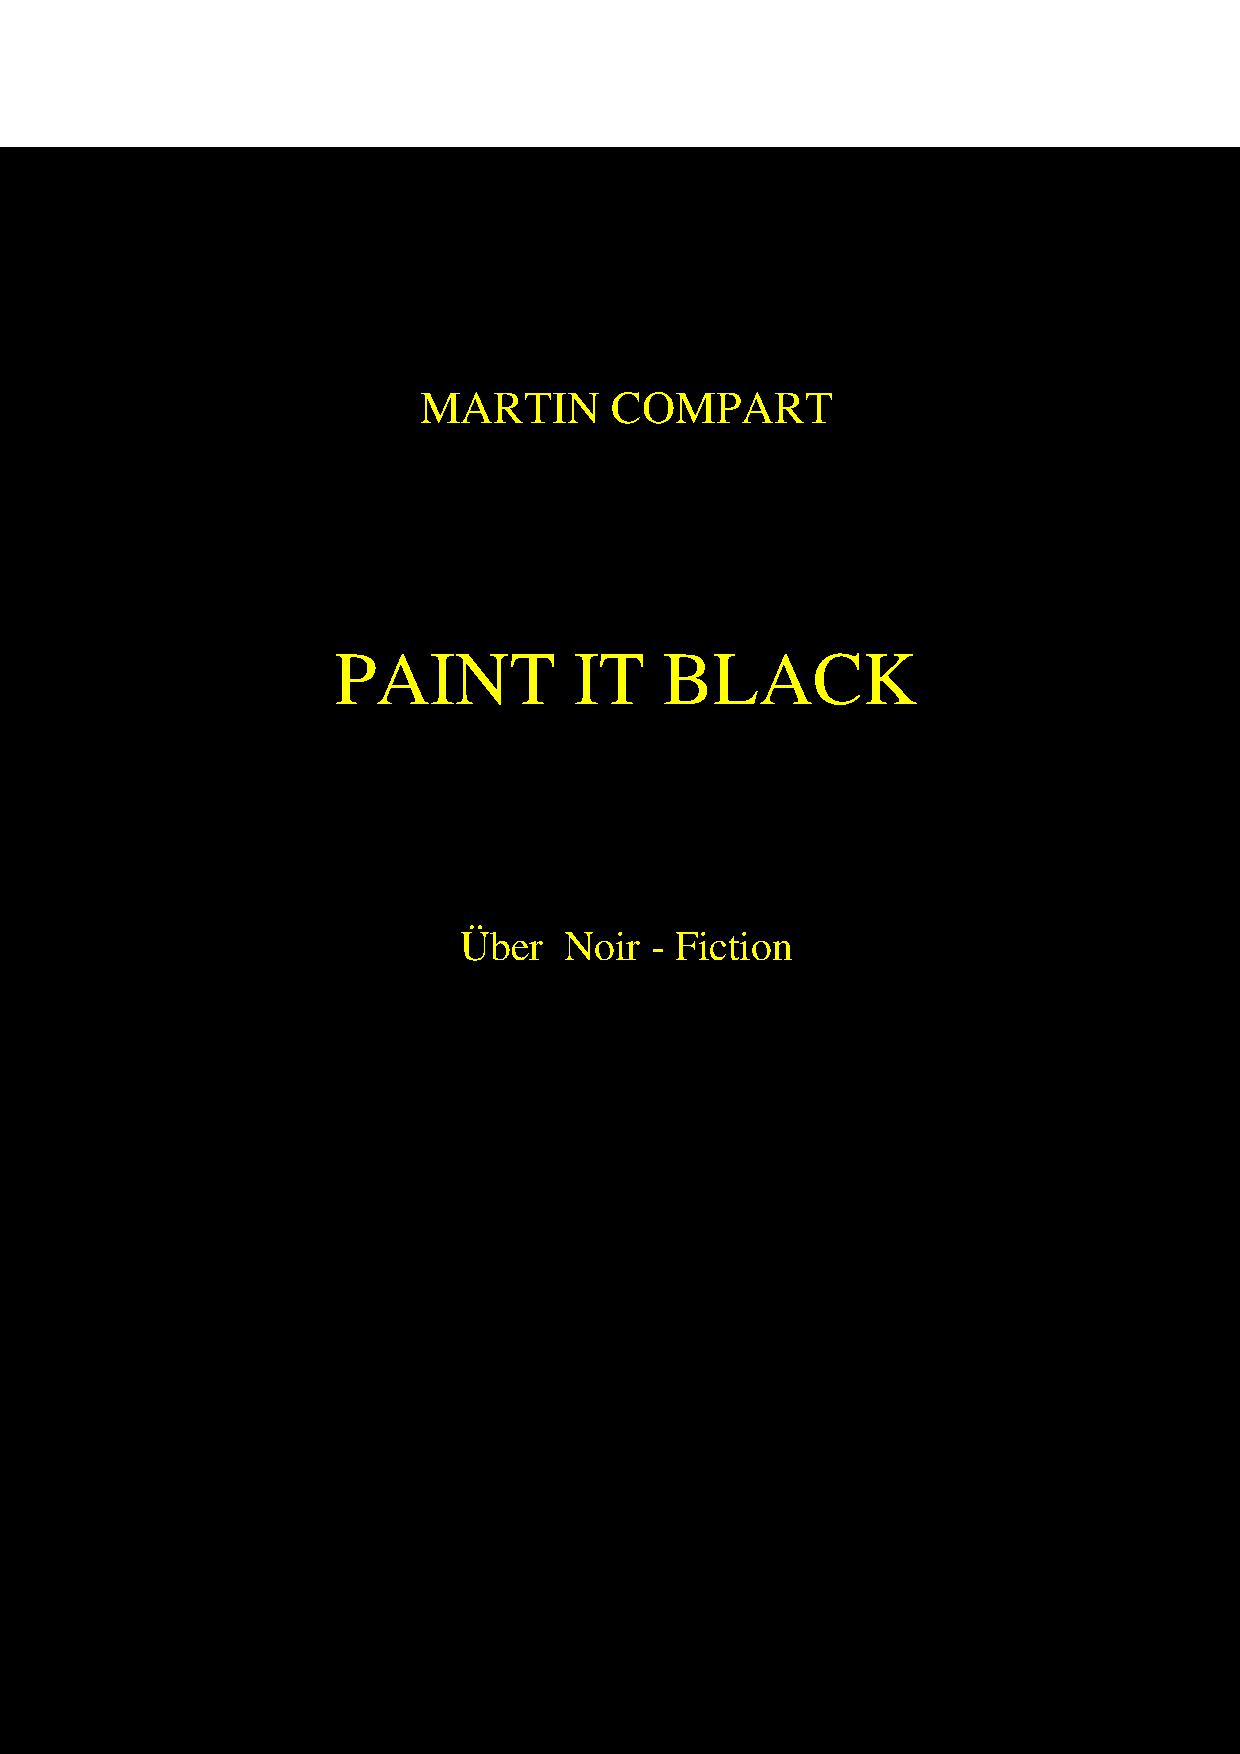 BLACK über Noir Fiction ebook dp B00F5FUIZ2 ref=sr 1 39 s=books&ie=UTF8&qid= &sr=1 39&keywords=martin part